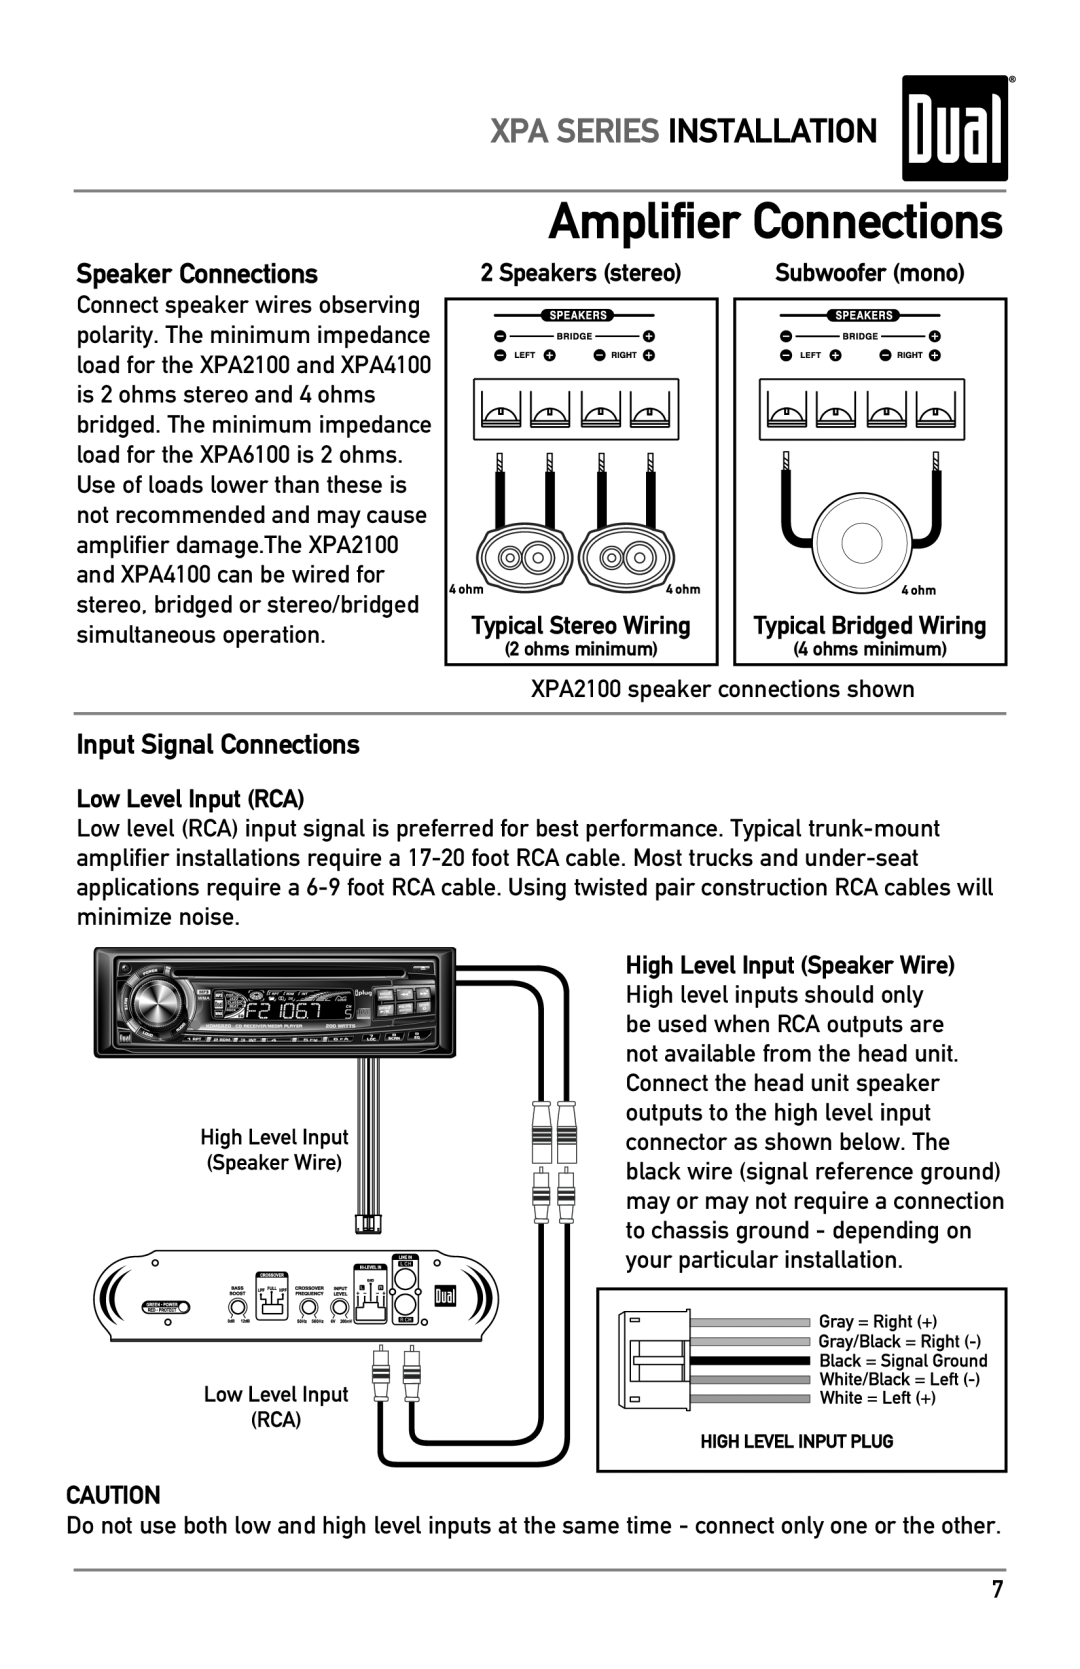 Dual XPA6100, XPA2100 Amplifier Connections, Speaker Connections, Input Signal Connections, Xpa Series Installation 